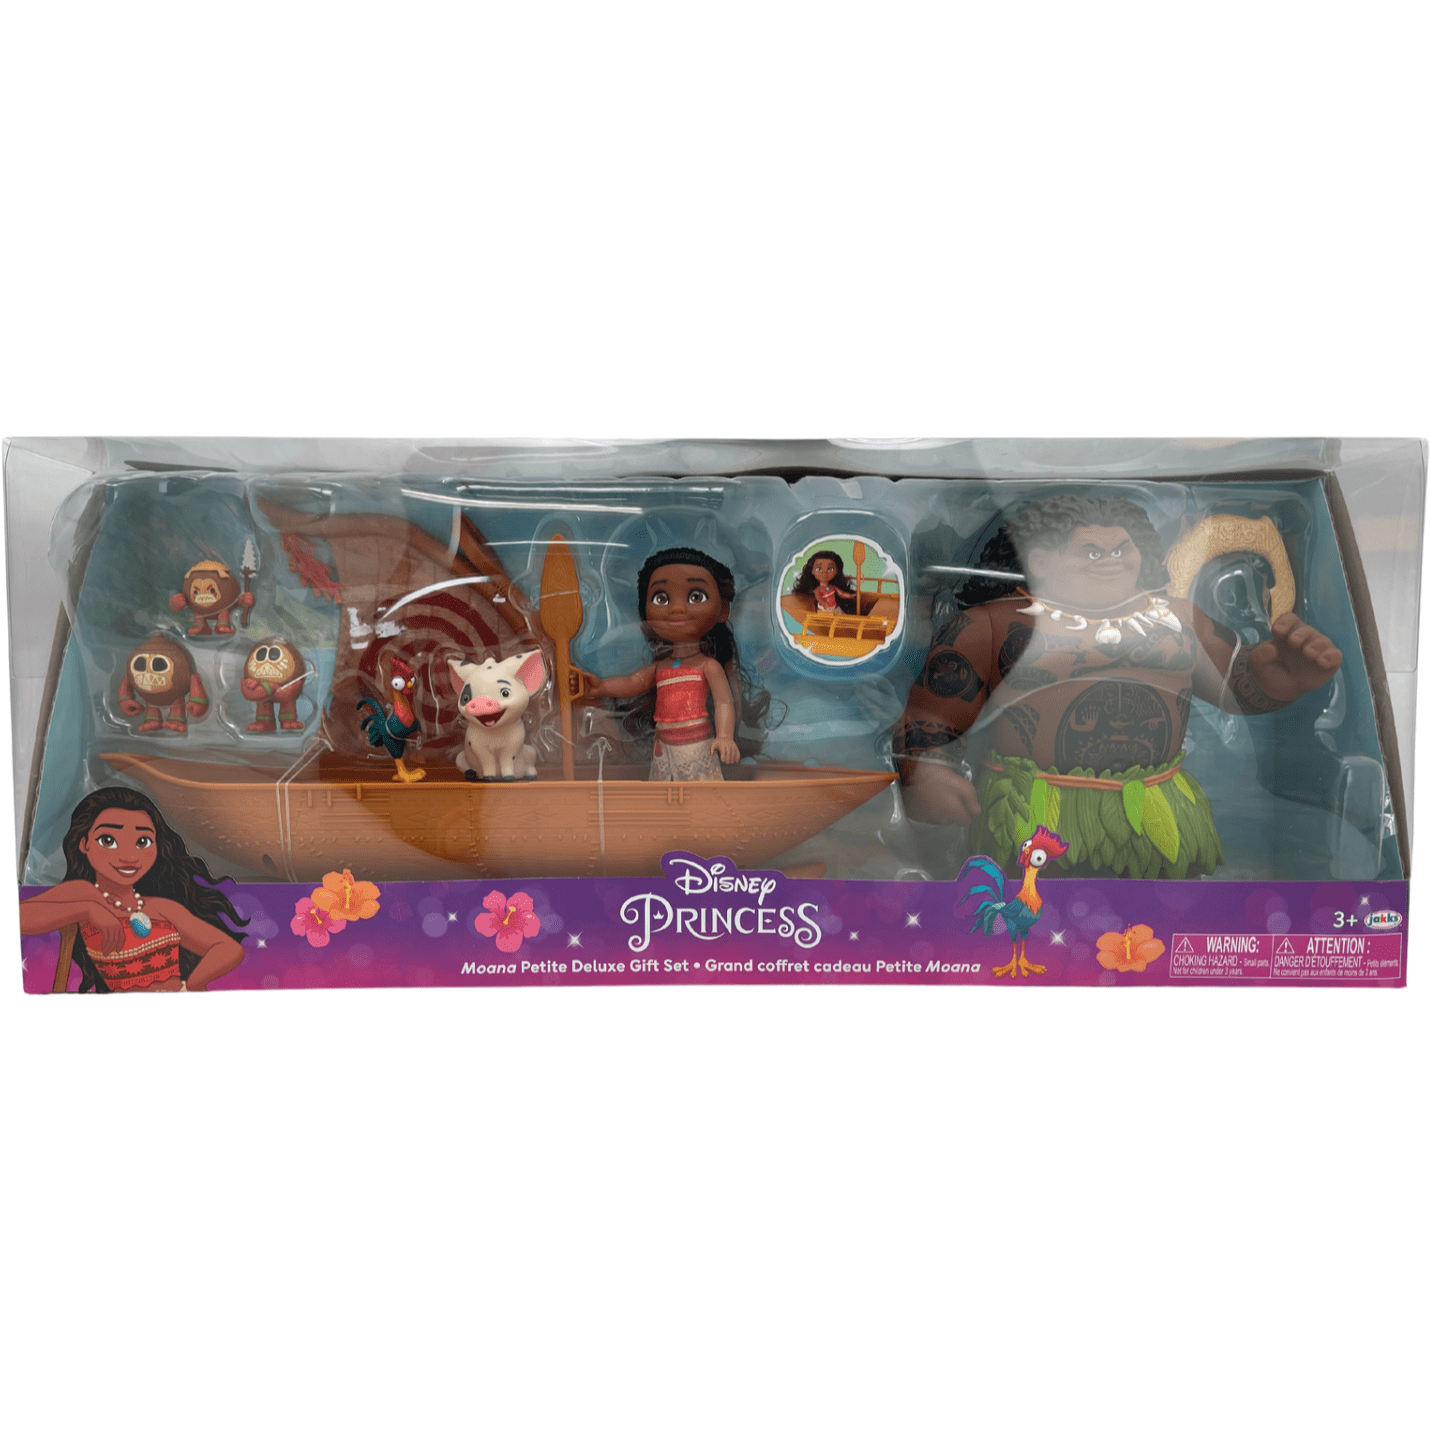 Disney Princess Moana Petite Deluxe Gift Set / Moana and Friends / Disney Playset